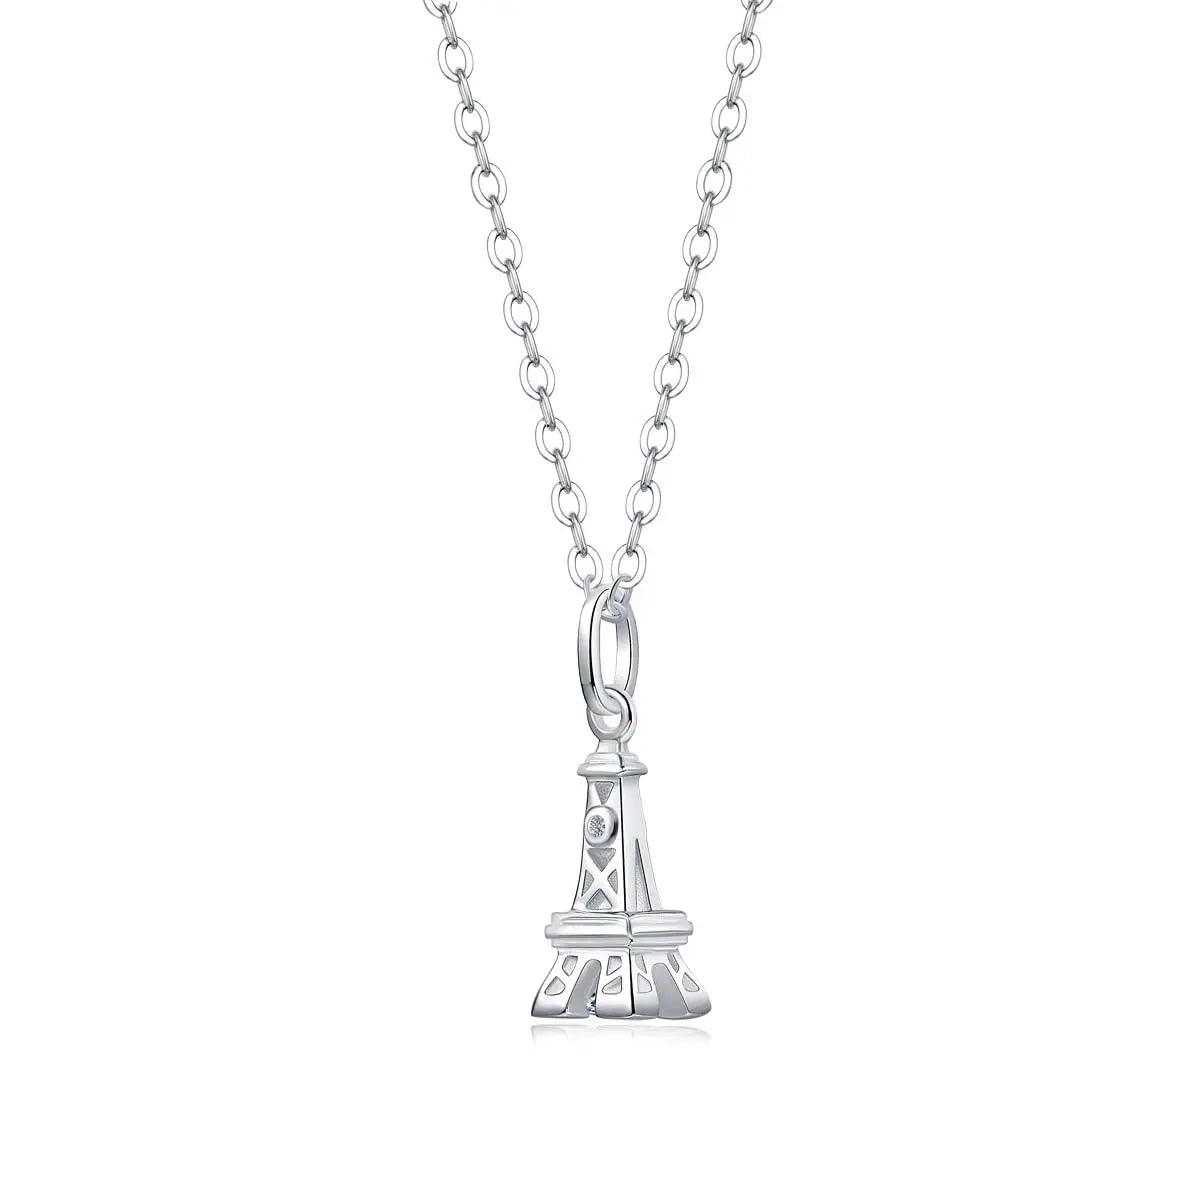 FairyLocus “Destiny Tower” 0.3ct Moissanite Necklace Sterling Silver 18K White Gold Plated D Color VVS1 Clarity Brilliant Necklace FLZZNLMS04 Fairylocus